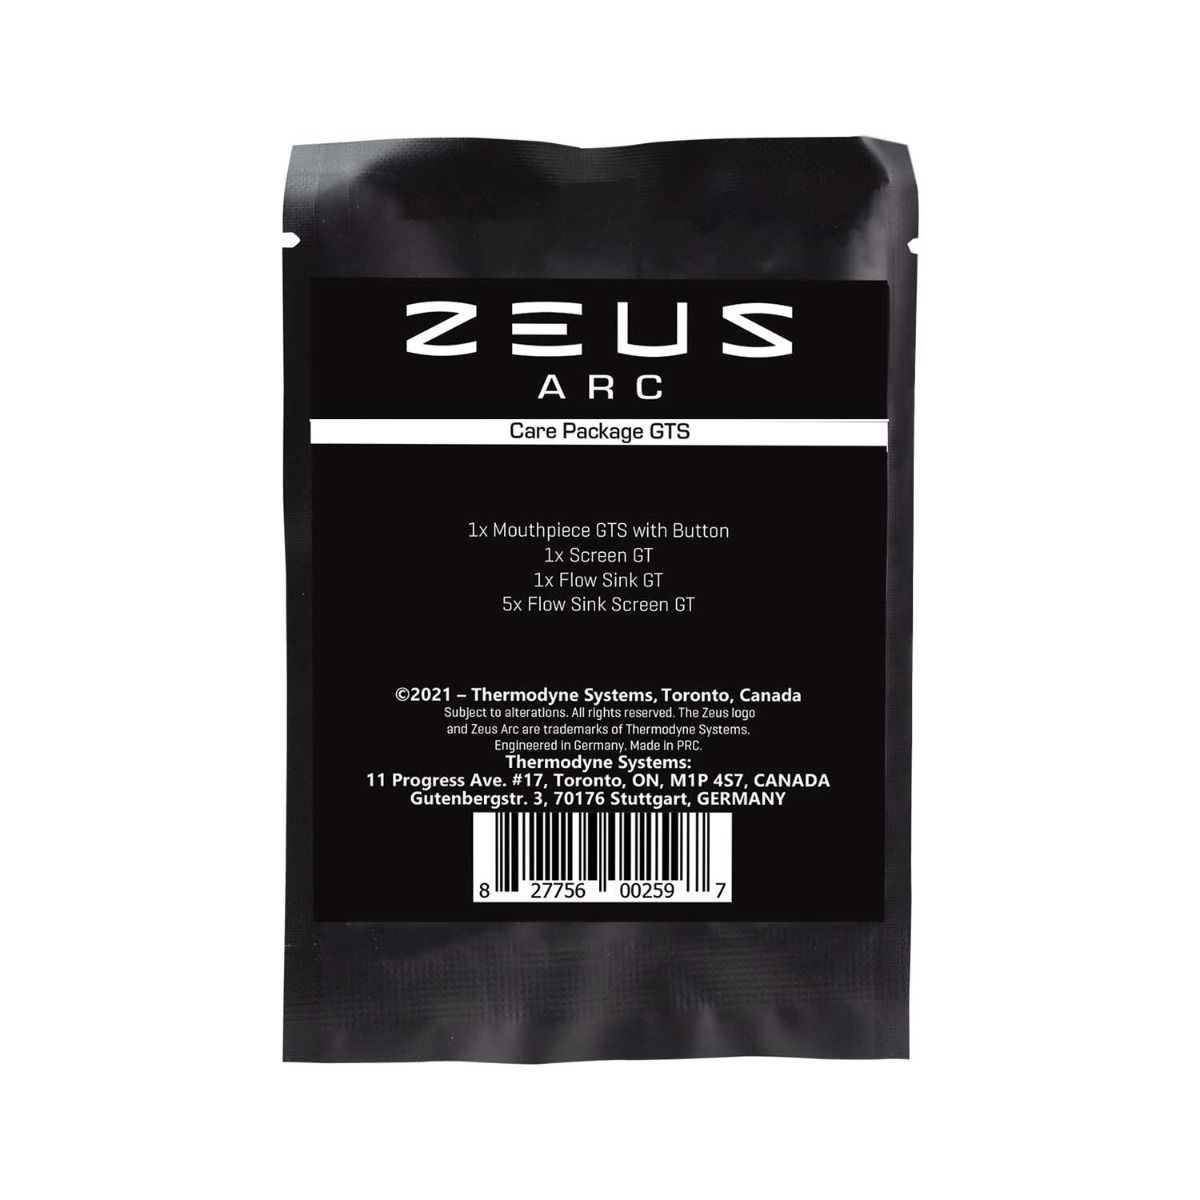 Zeus Arc Care Package Gts